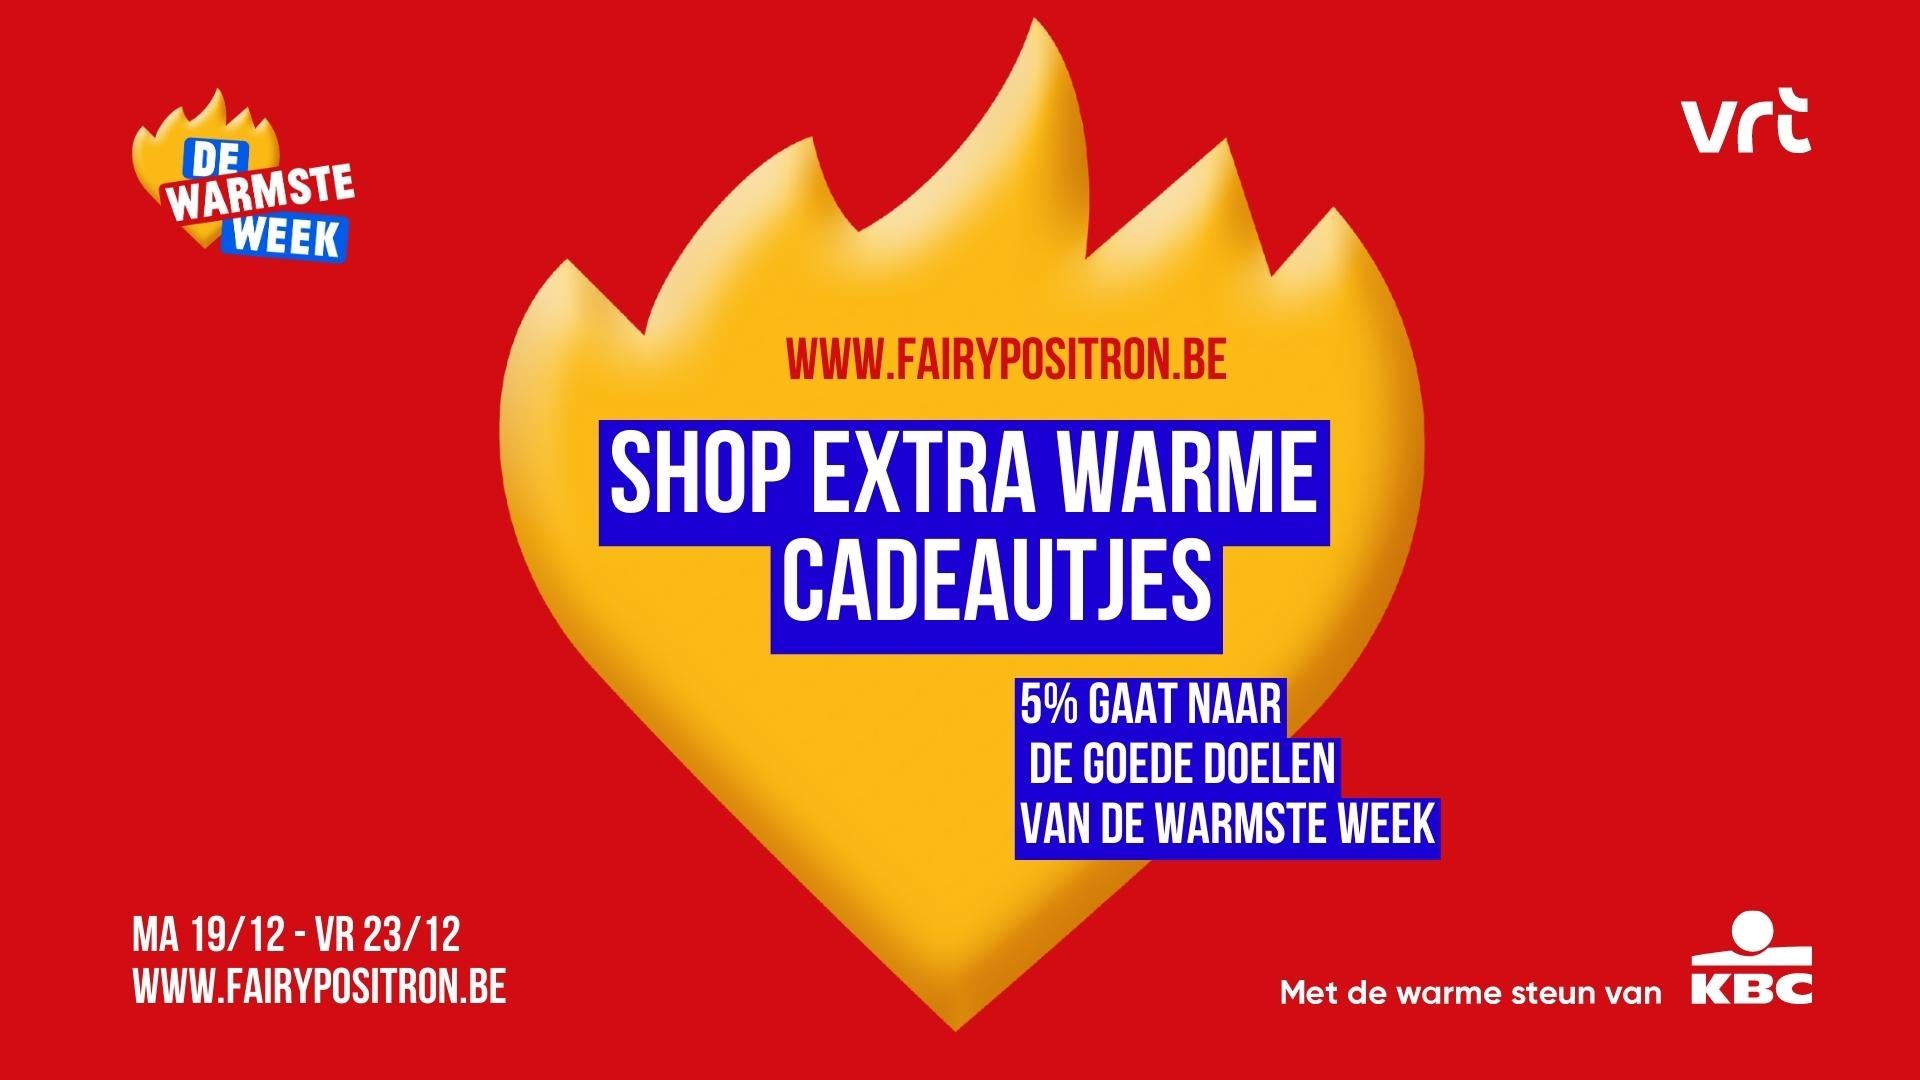 Shop fair & warm for The Warmest Week